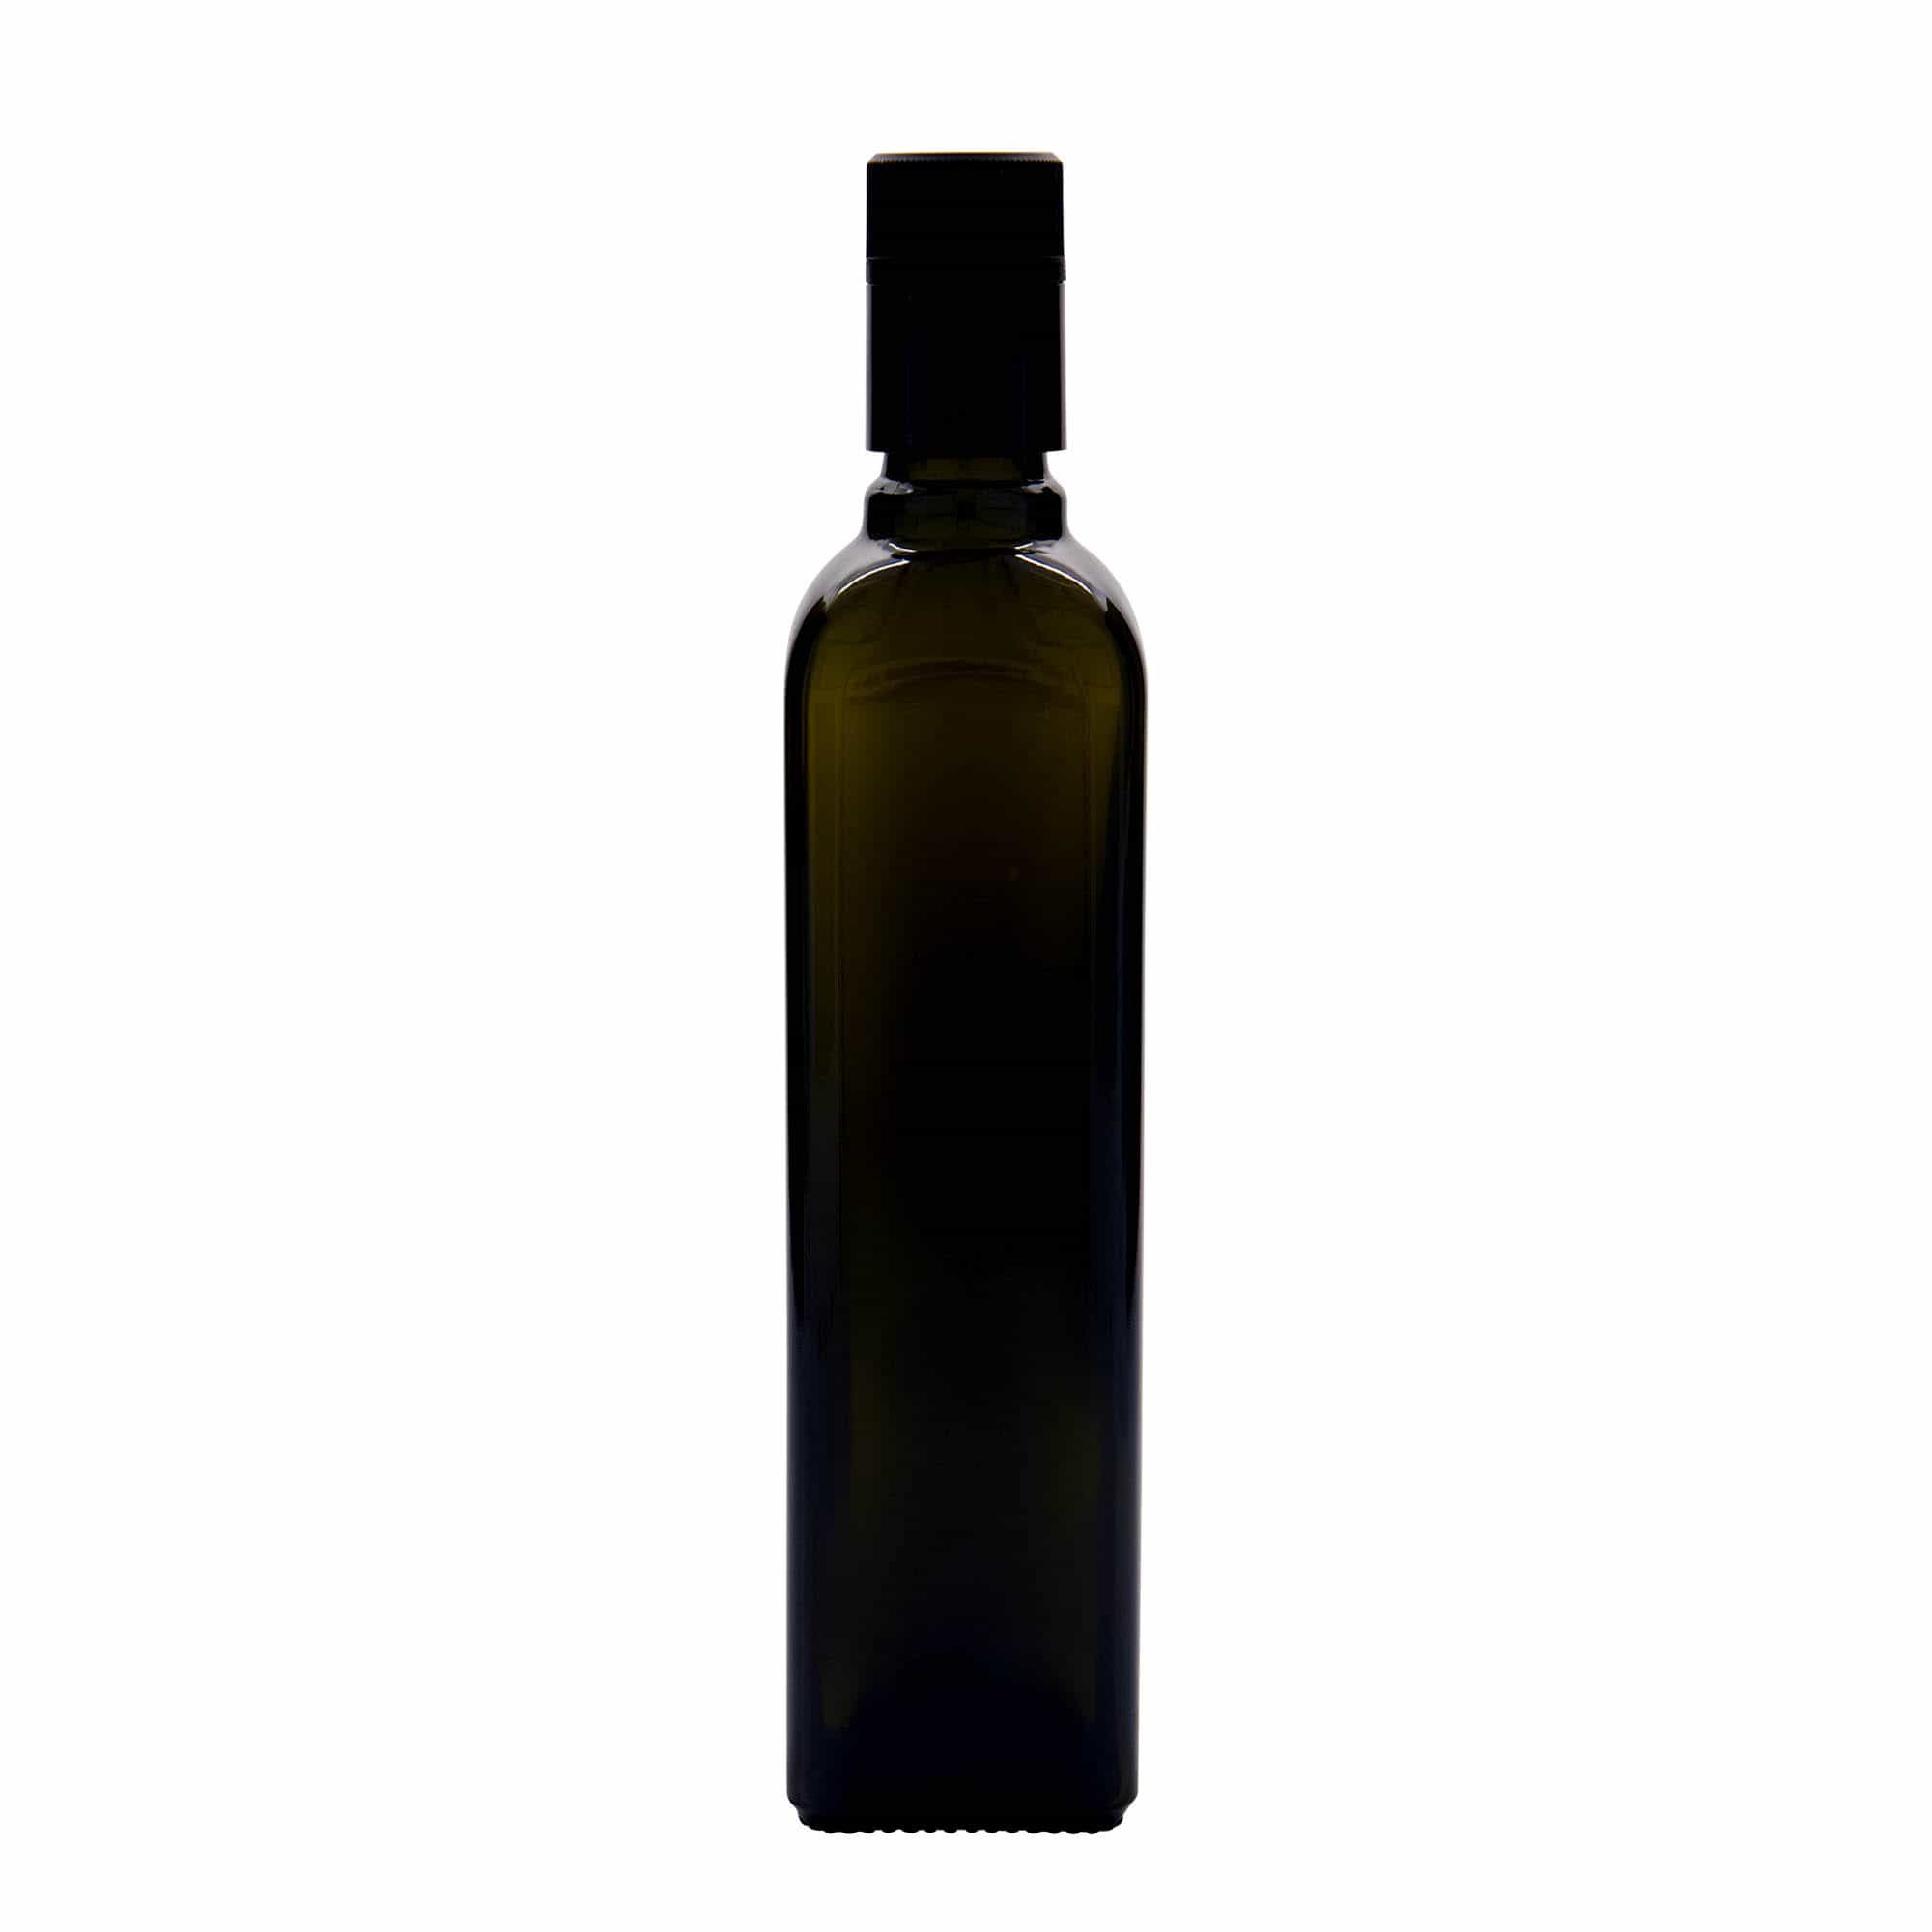 500 ml oil/vinegar bottle 'Quadra', glass, square, antique green, closure: DOP